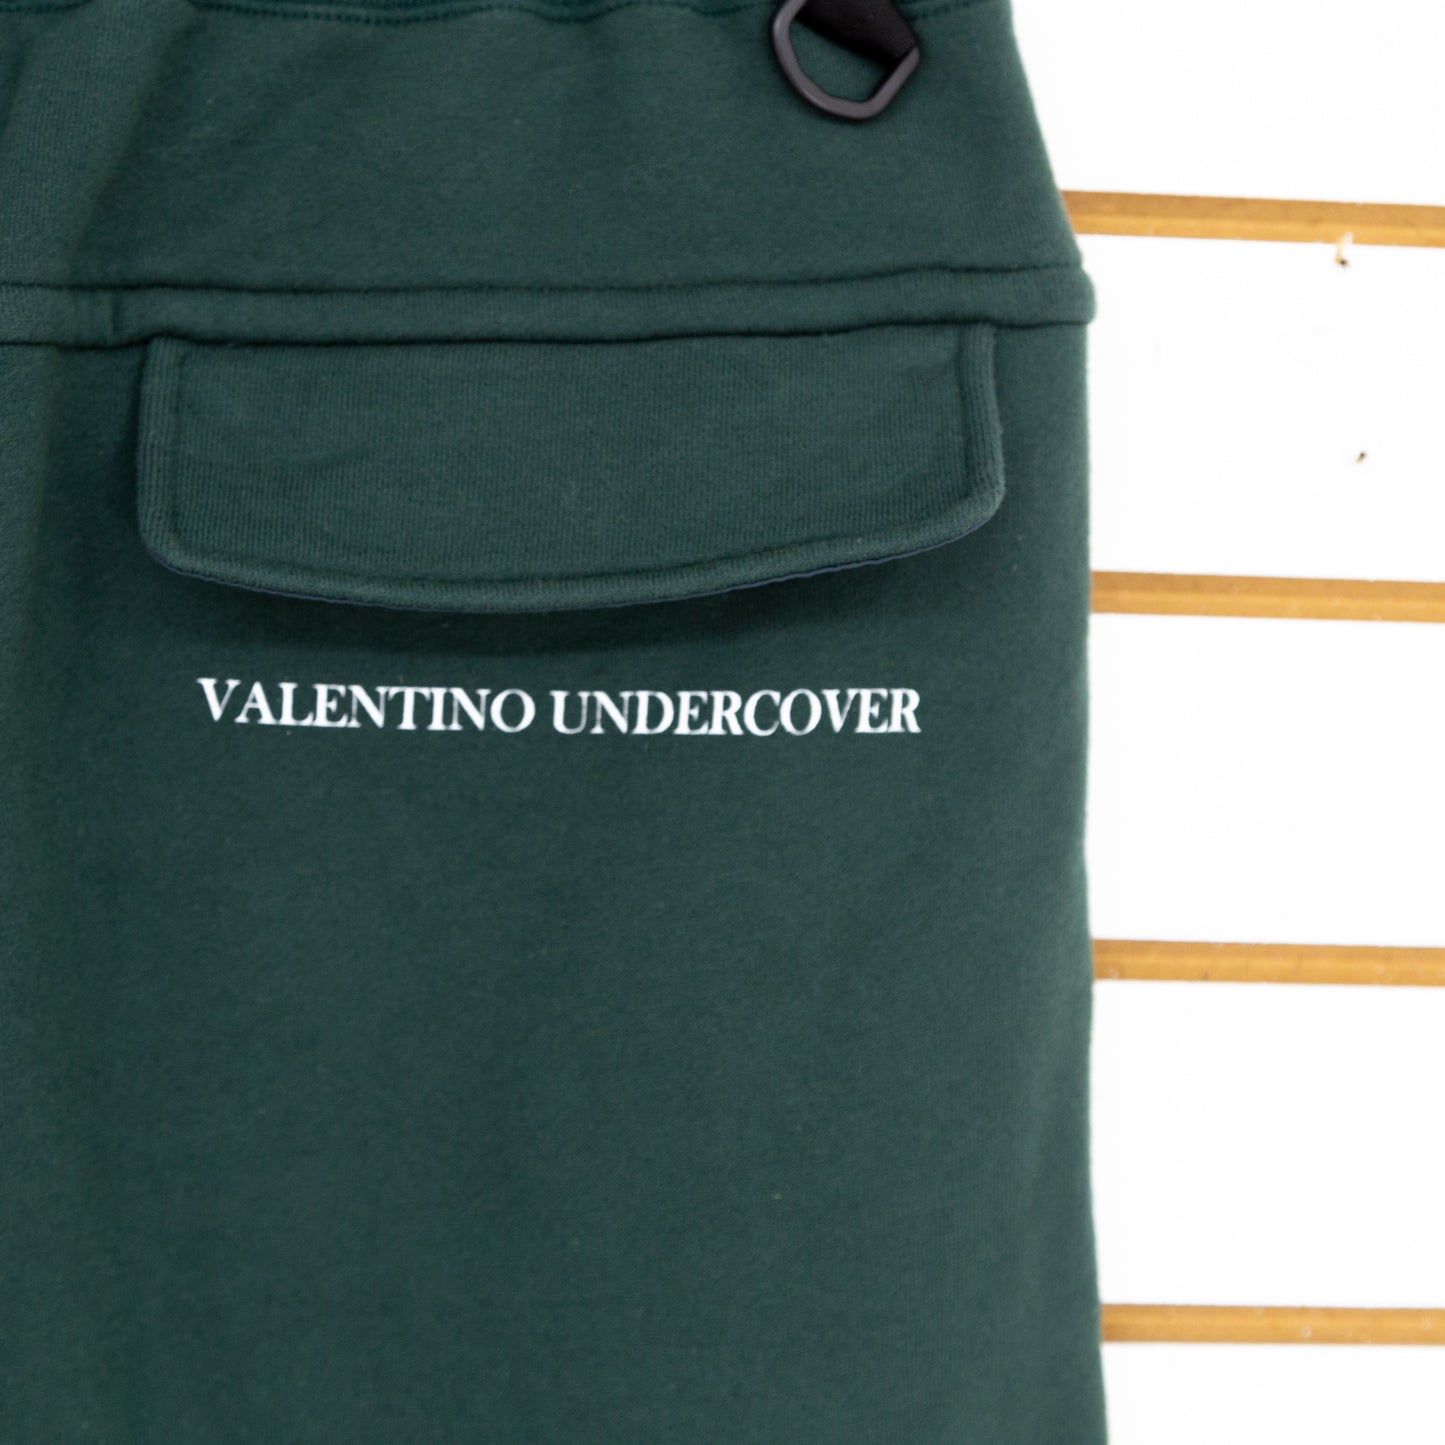 Valentino x Undercover FW 2019 Sweatpant